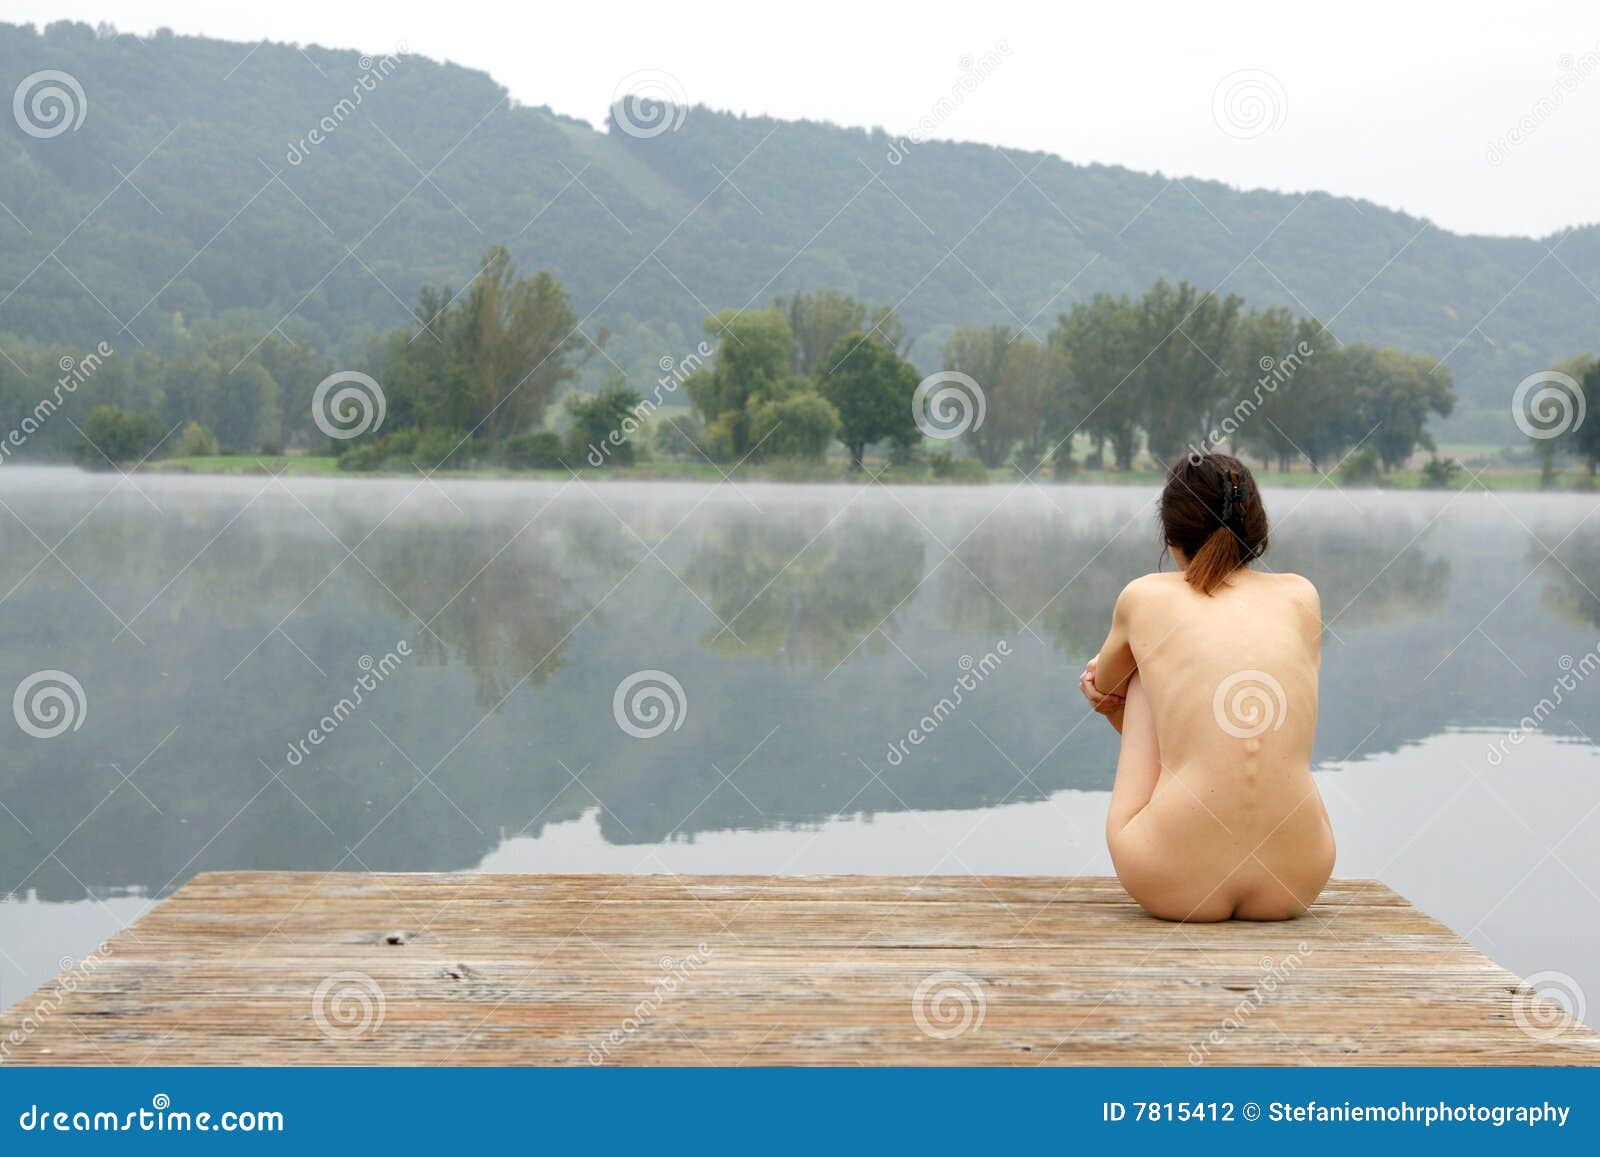 Lake nude on 